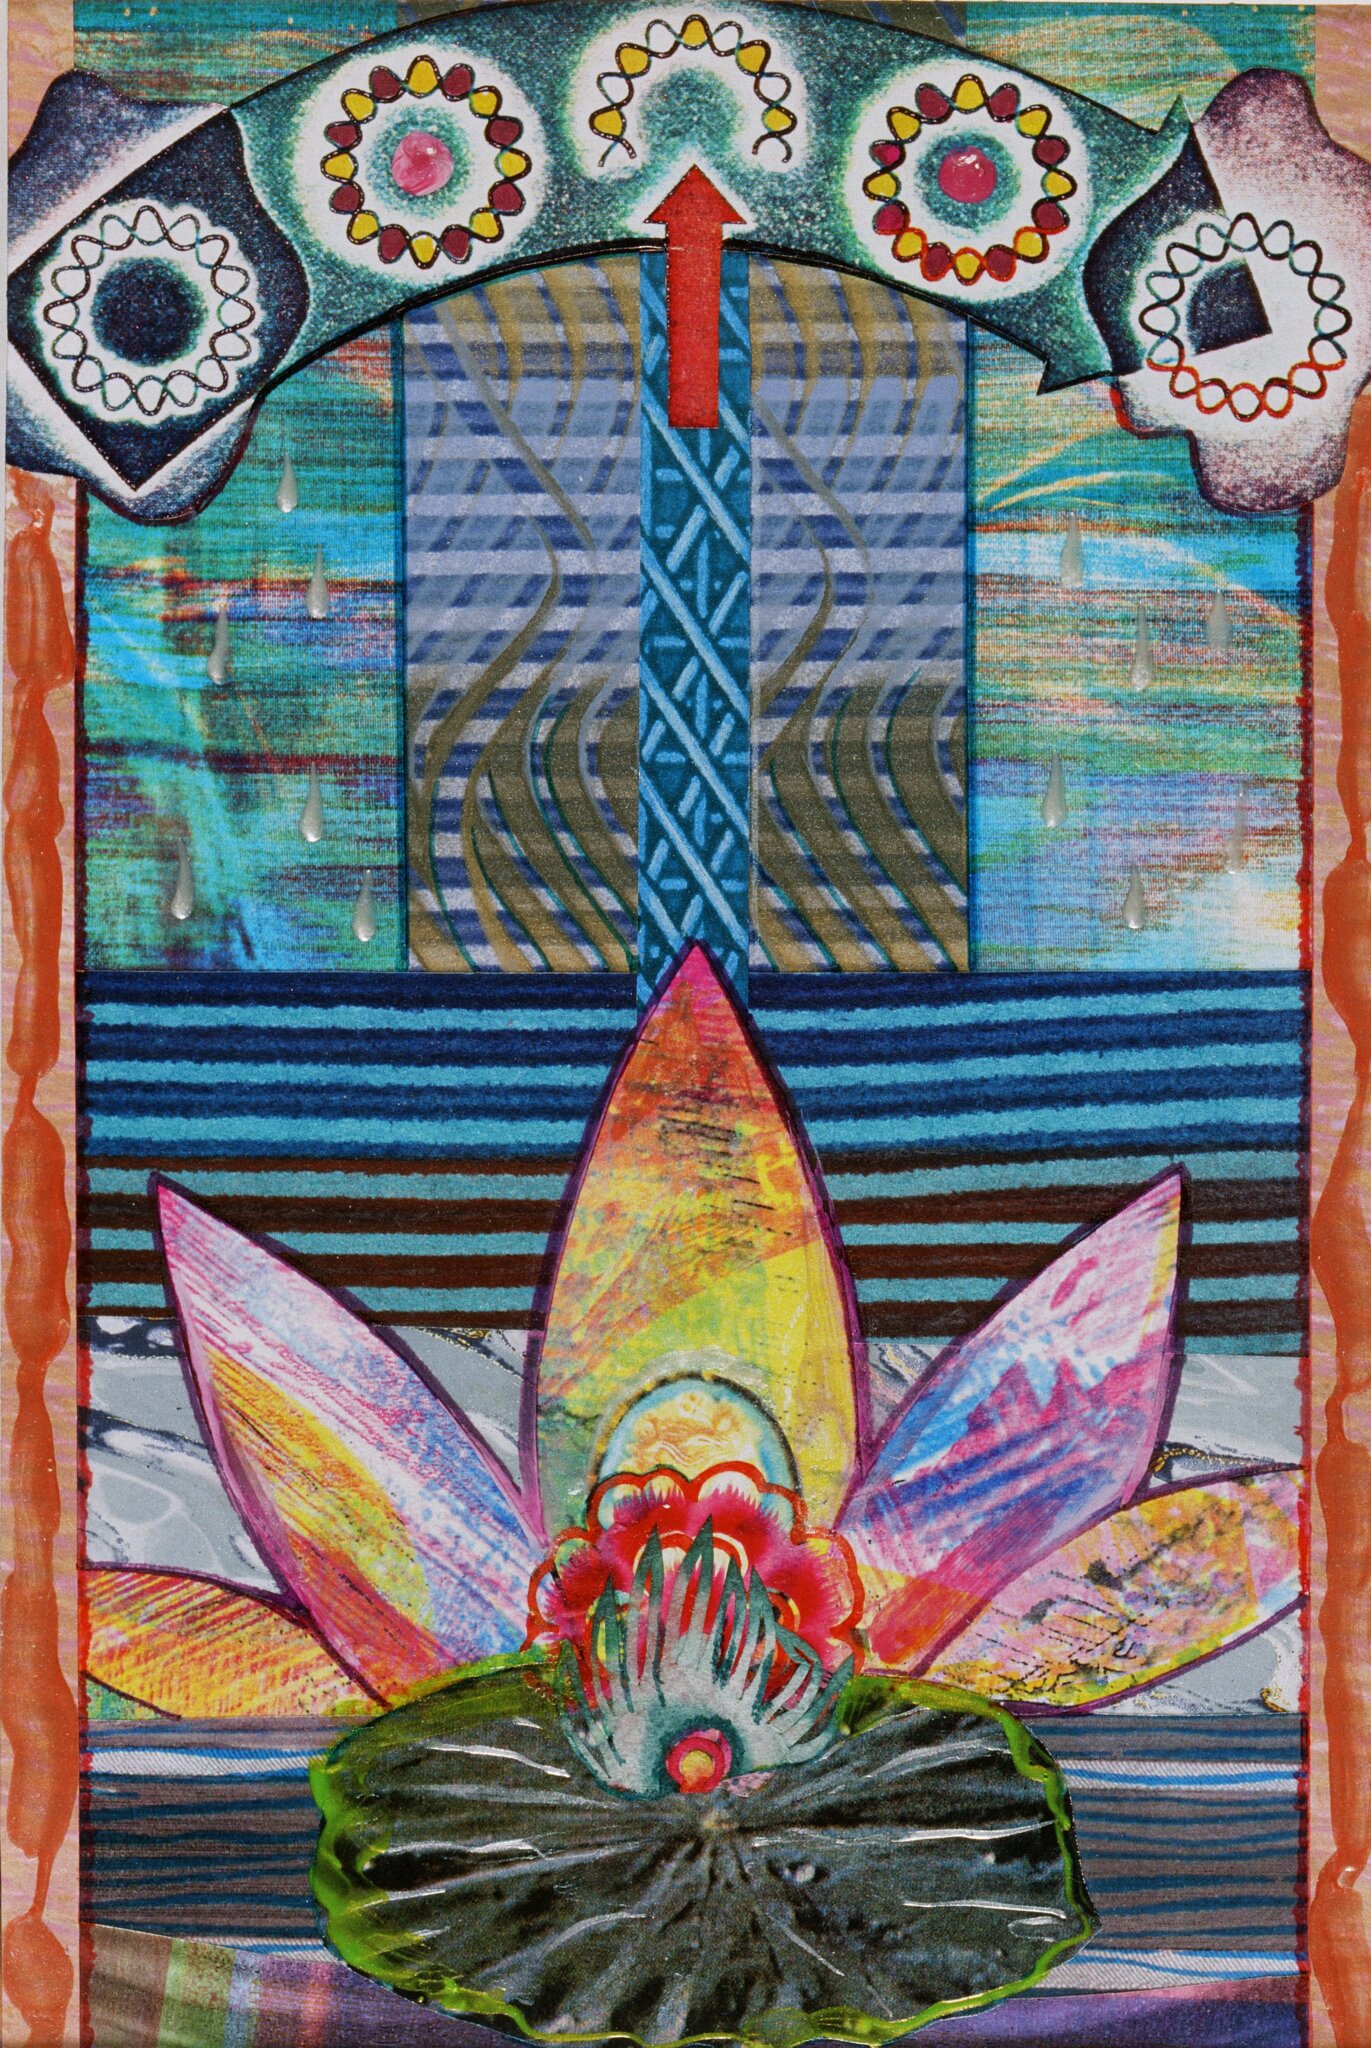 Amy Zerner's "Lotus Love" (9" x 10")